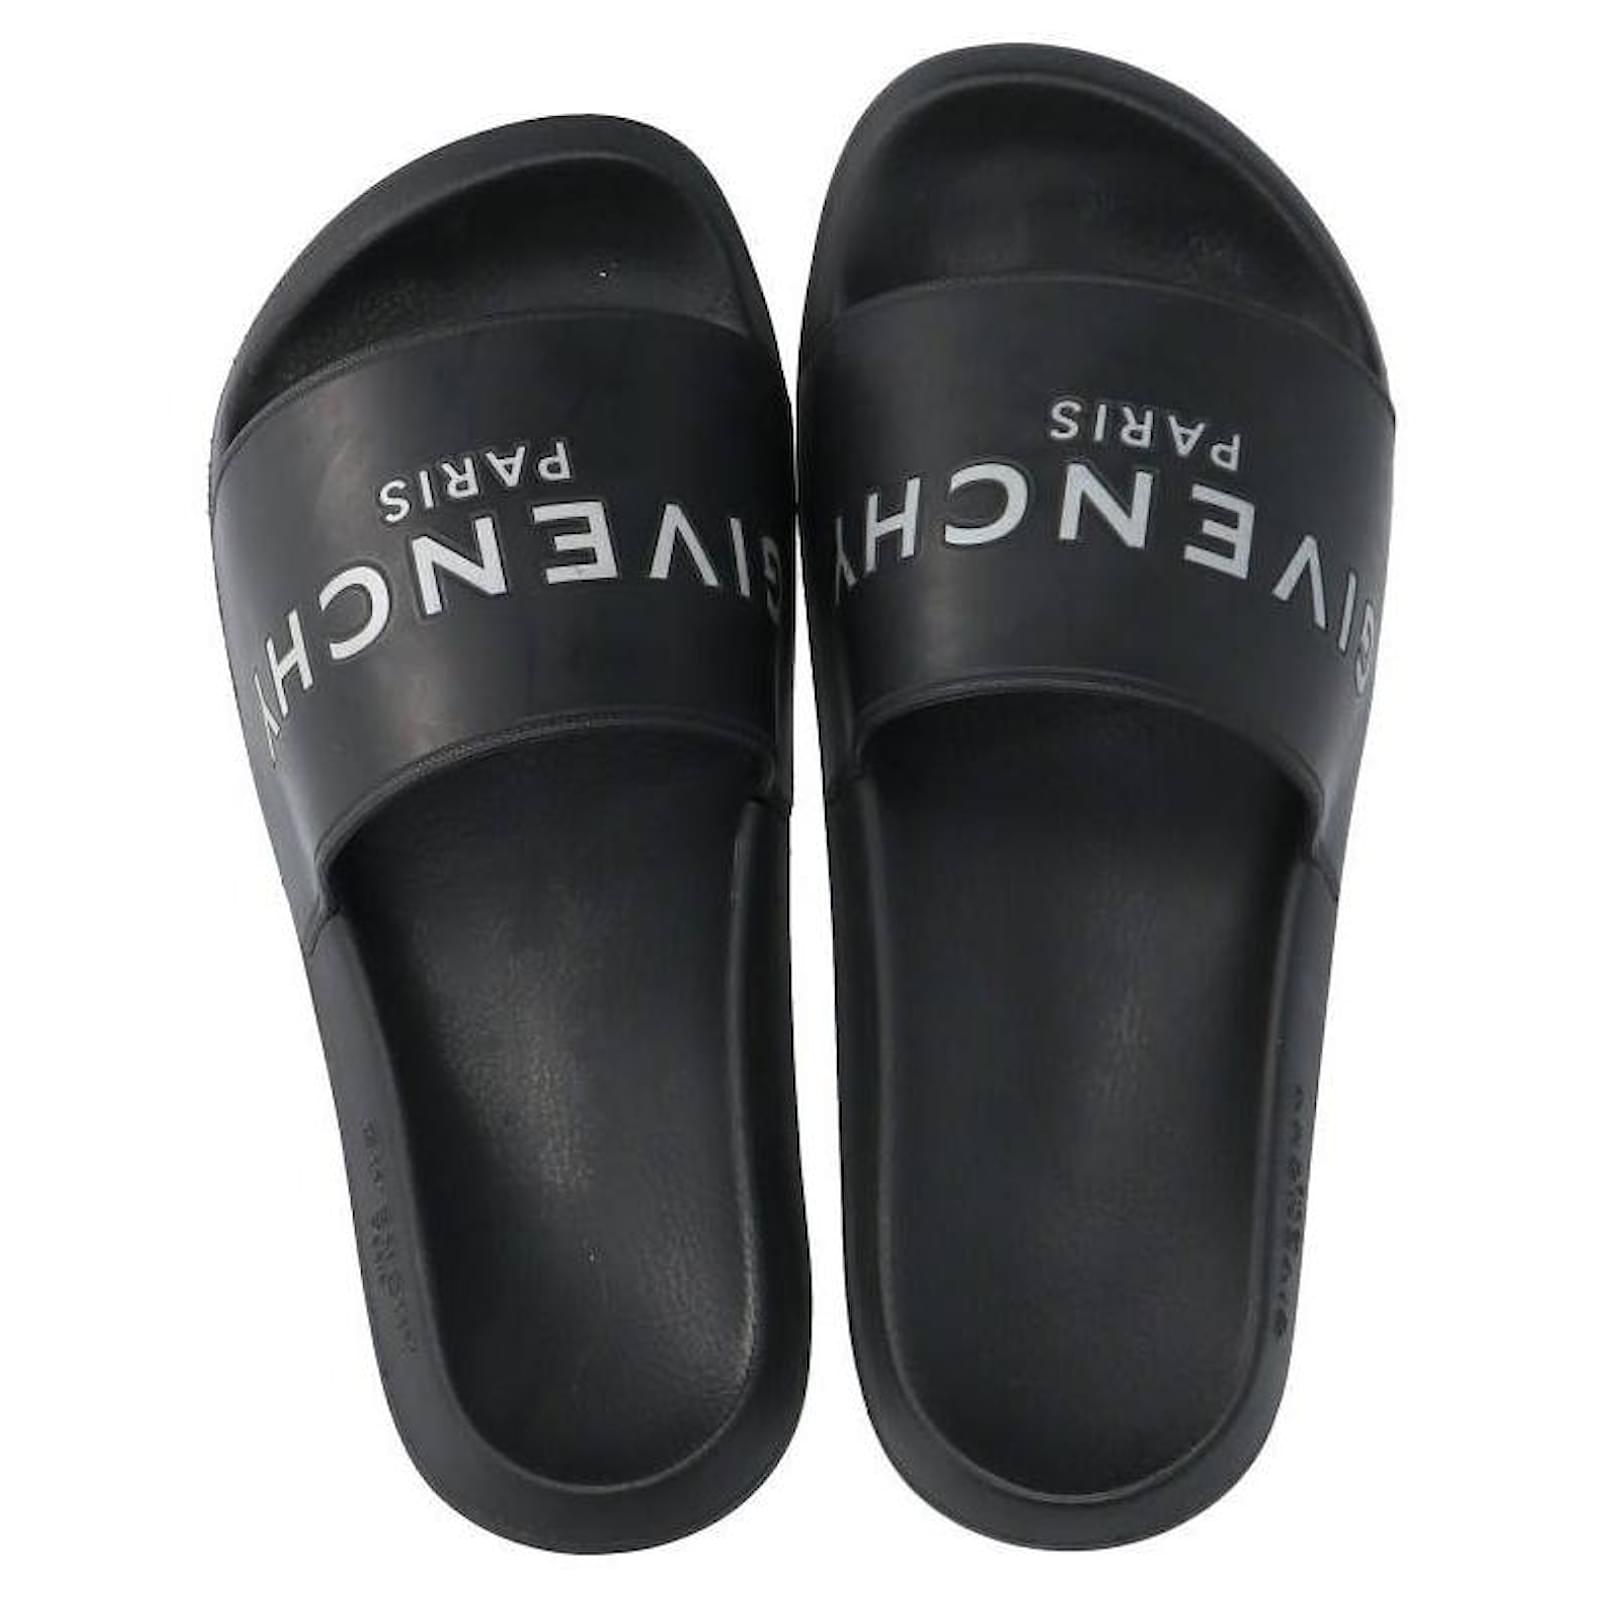 Used] GIVENCHY logo design sandals 